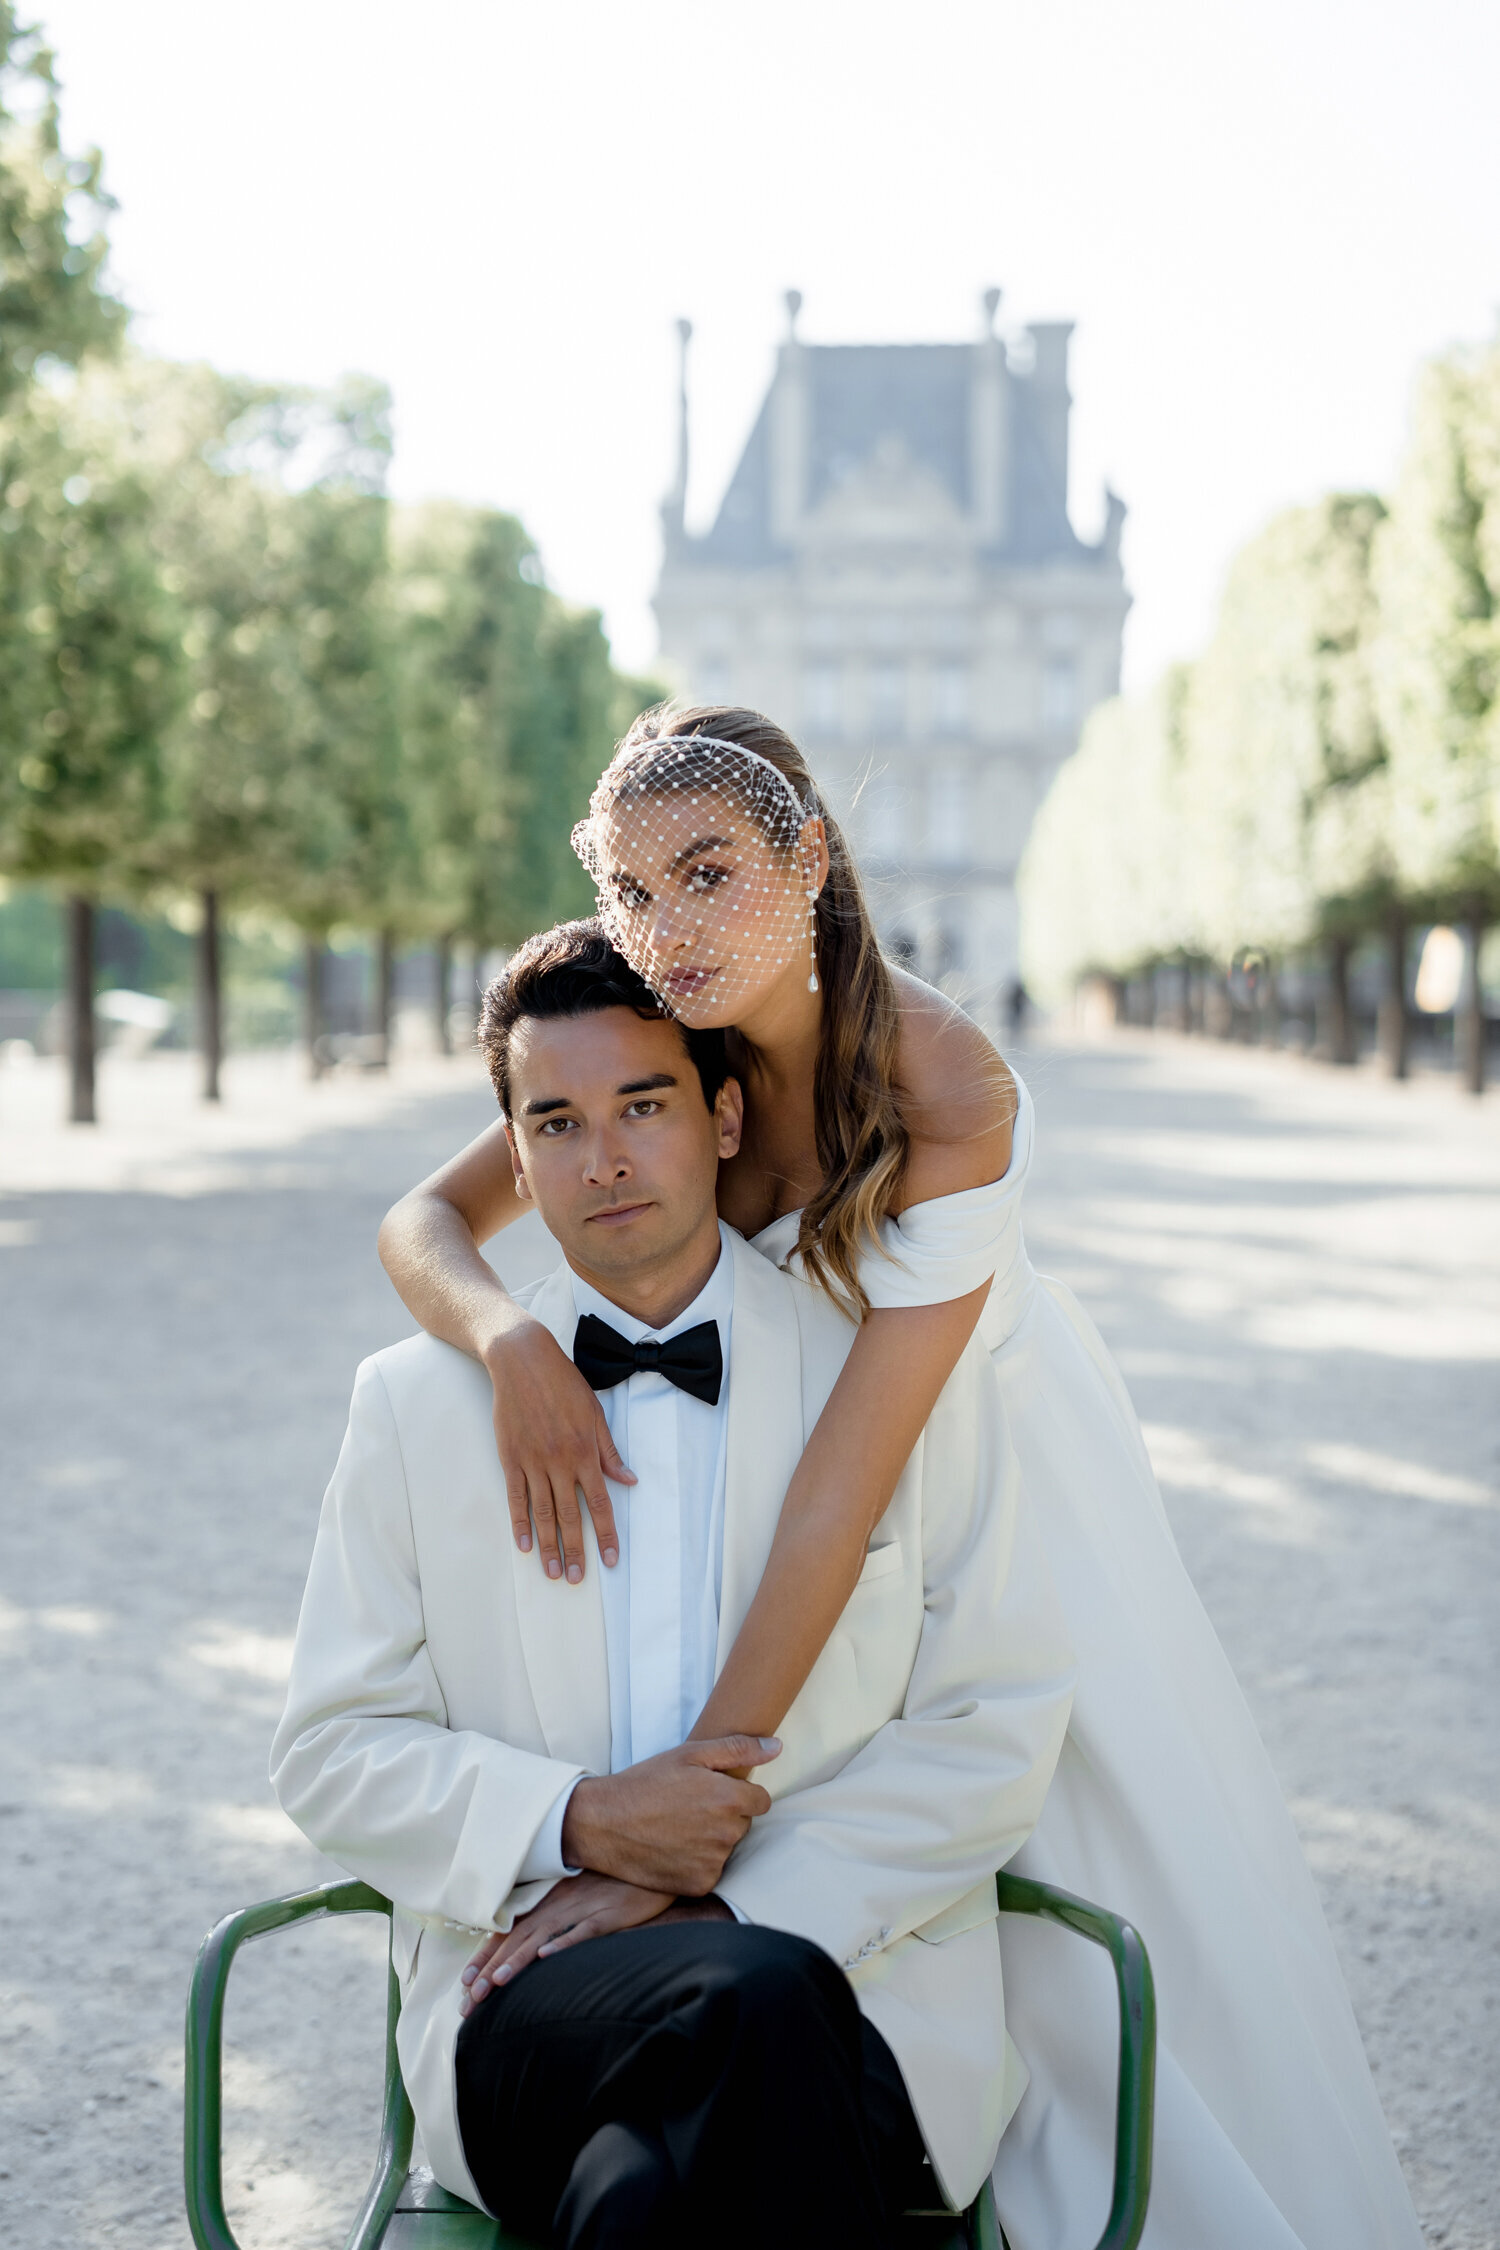 Tuileries Garden couple wedding